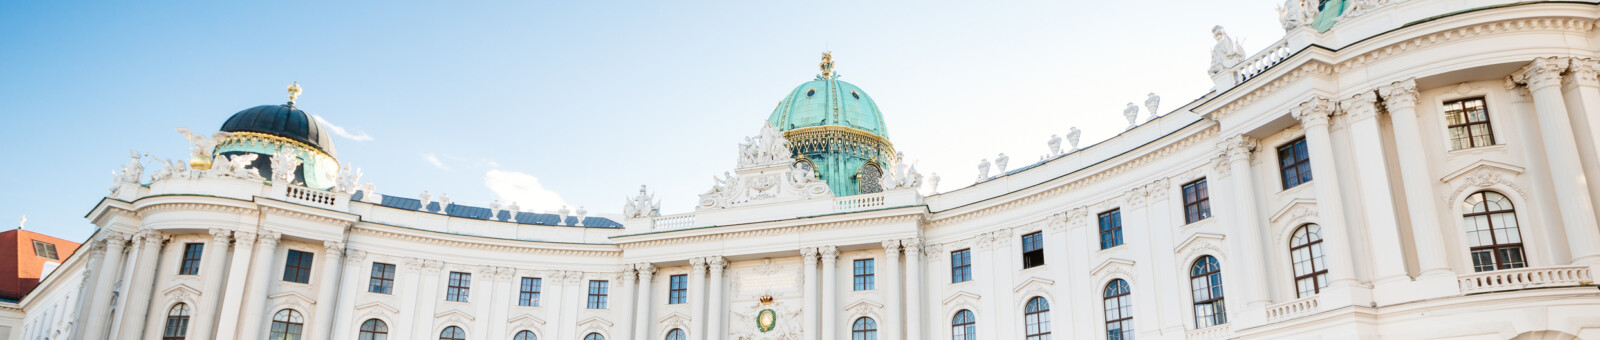     Hofburg - Imperial Palace 